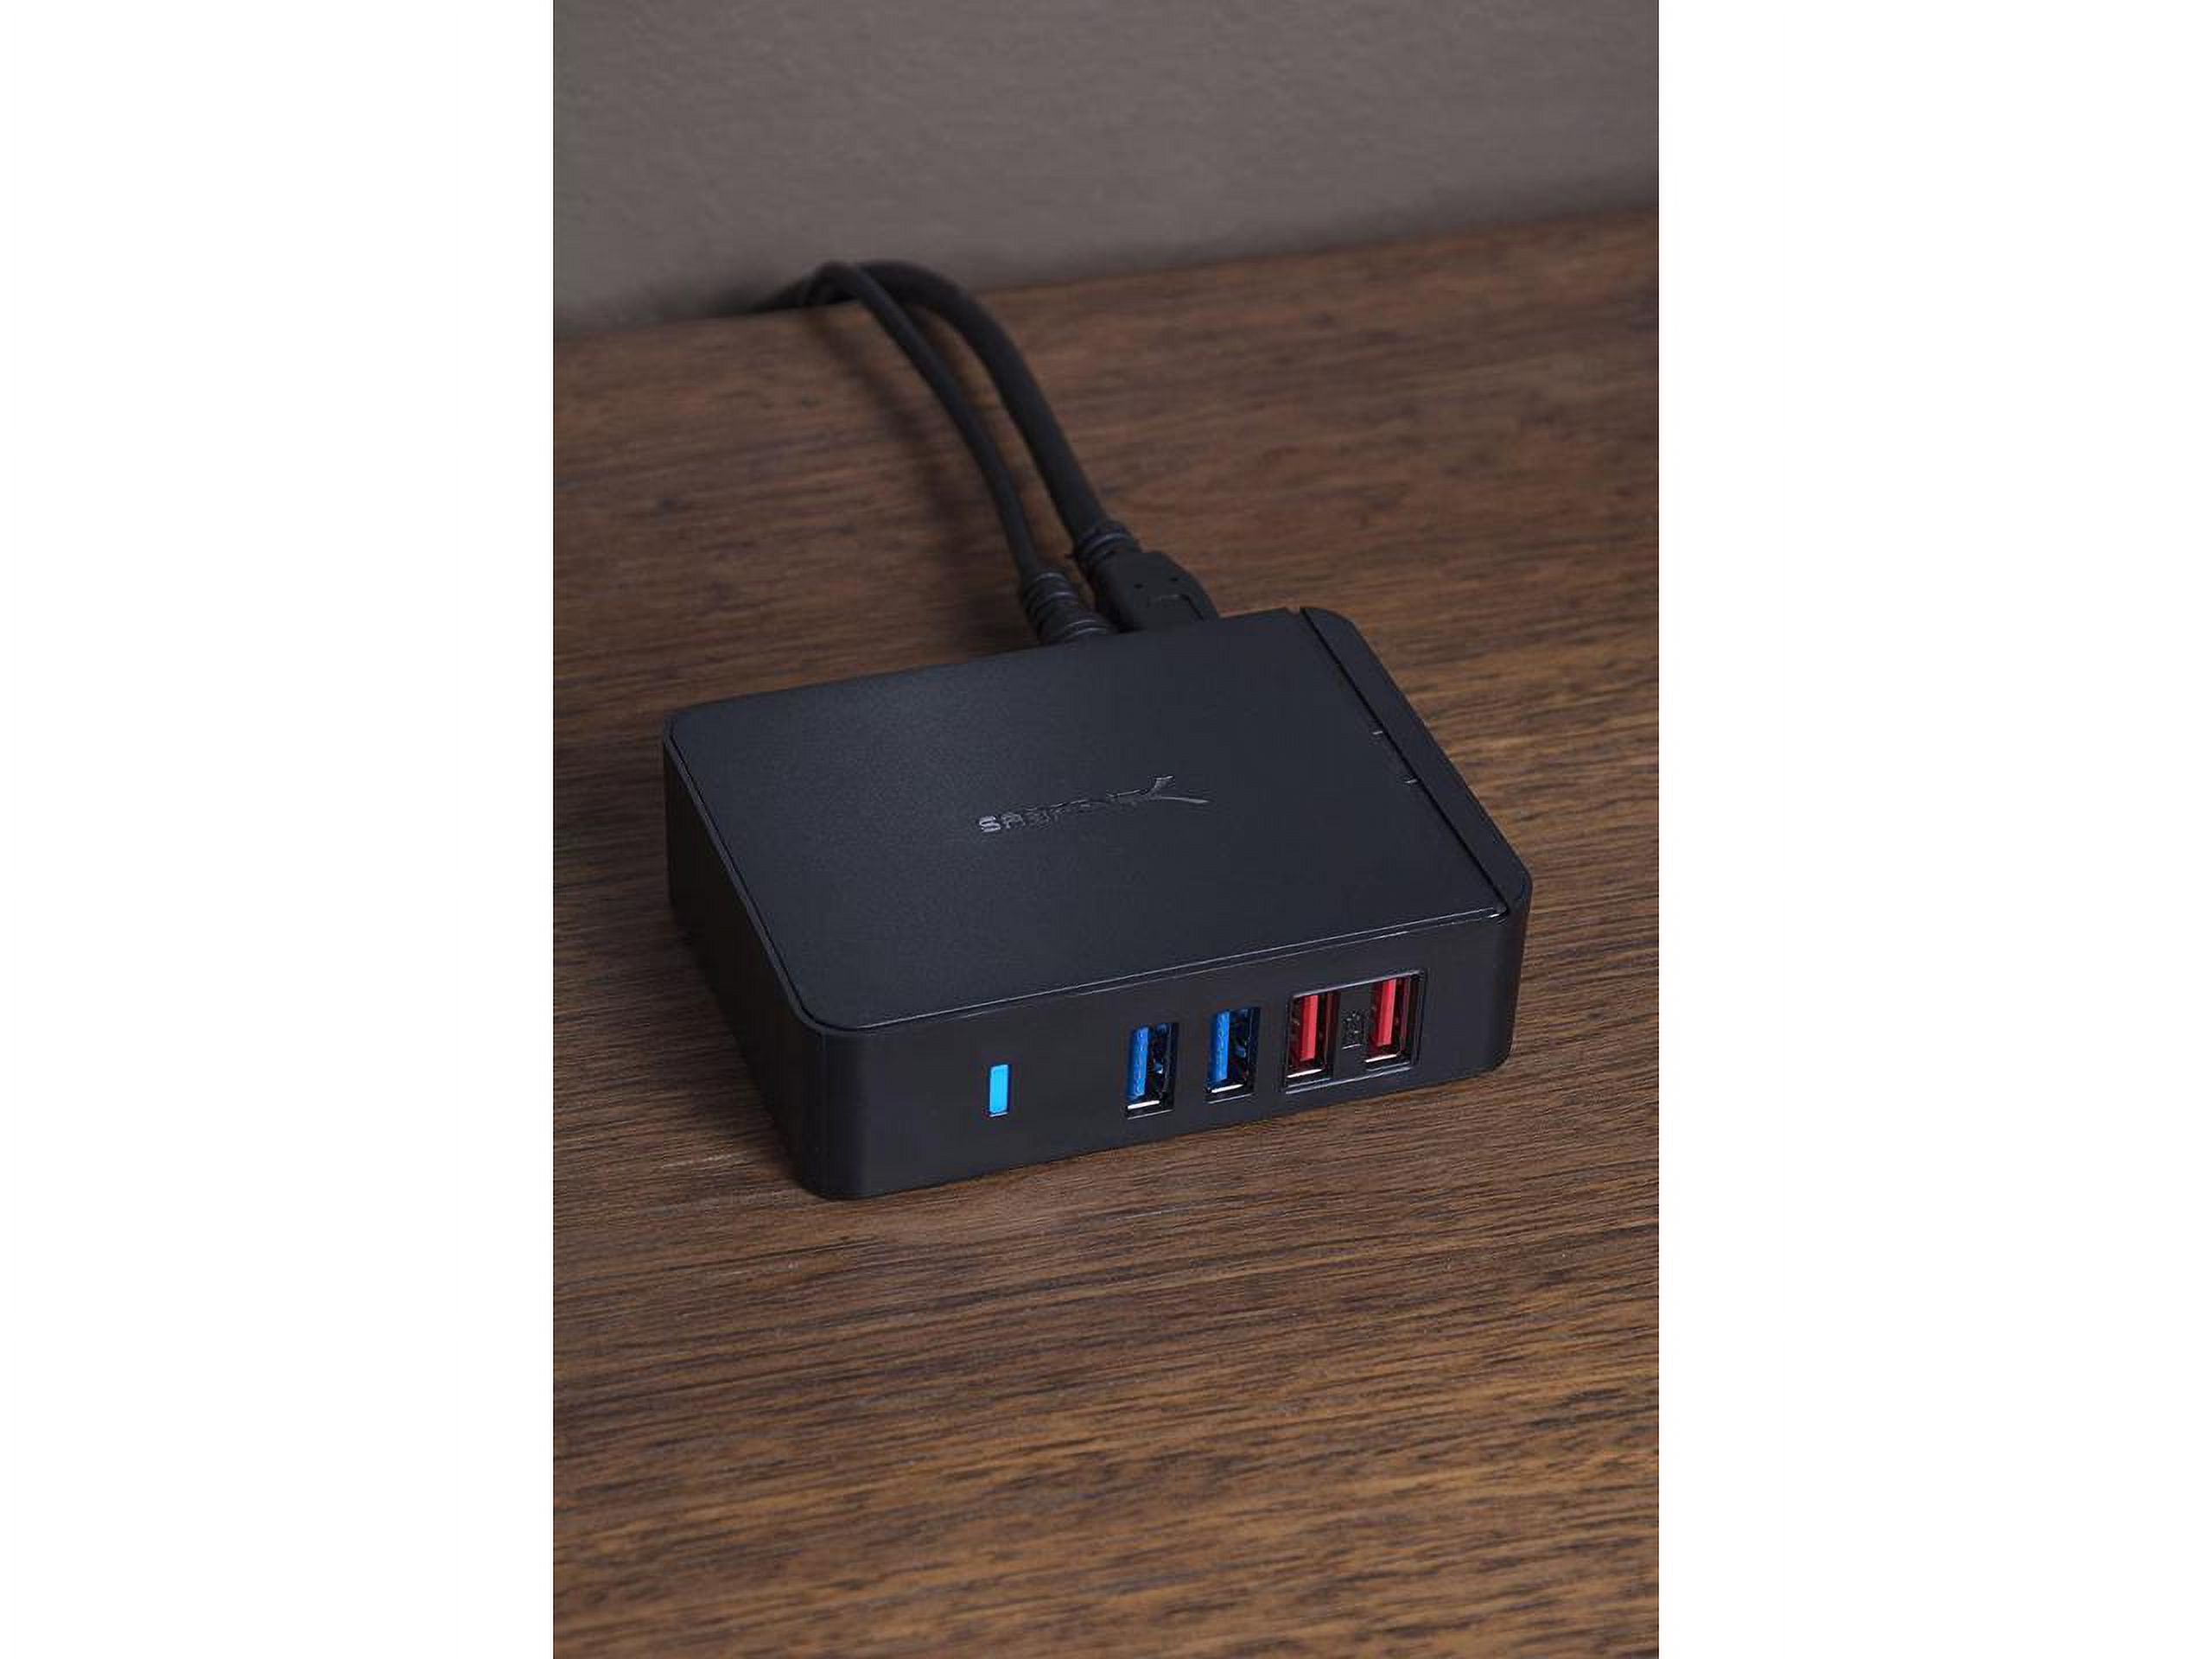 SABRENT 7 Port USB 3.0 HUB + 2 Charging Ports with 12V/4A Power Adapter [Black] (HB-U930) - image 3 of 9